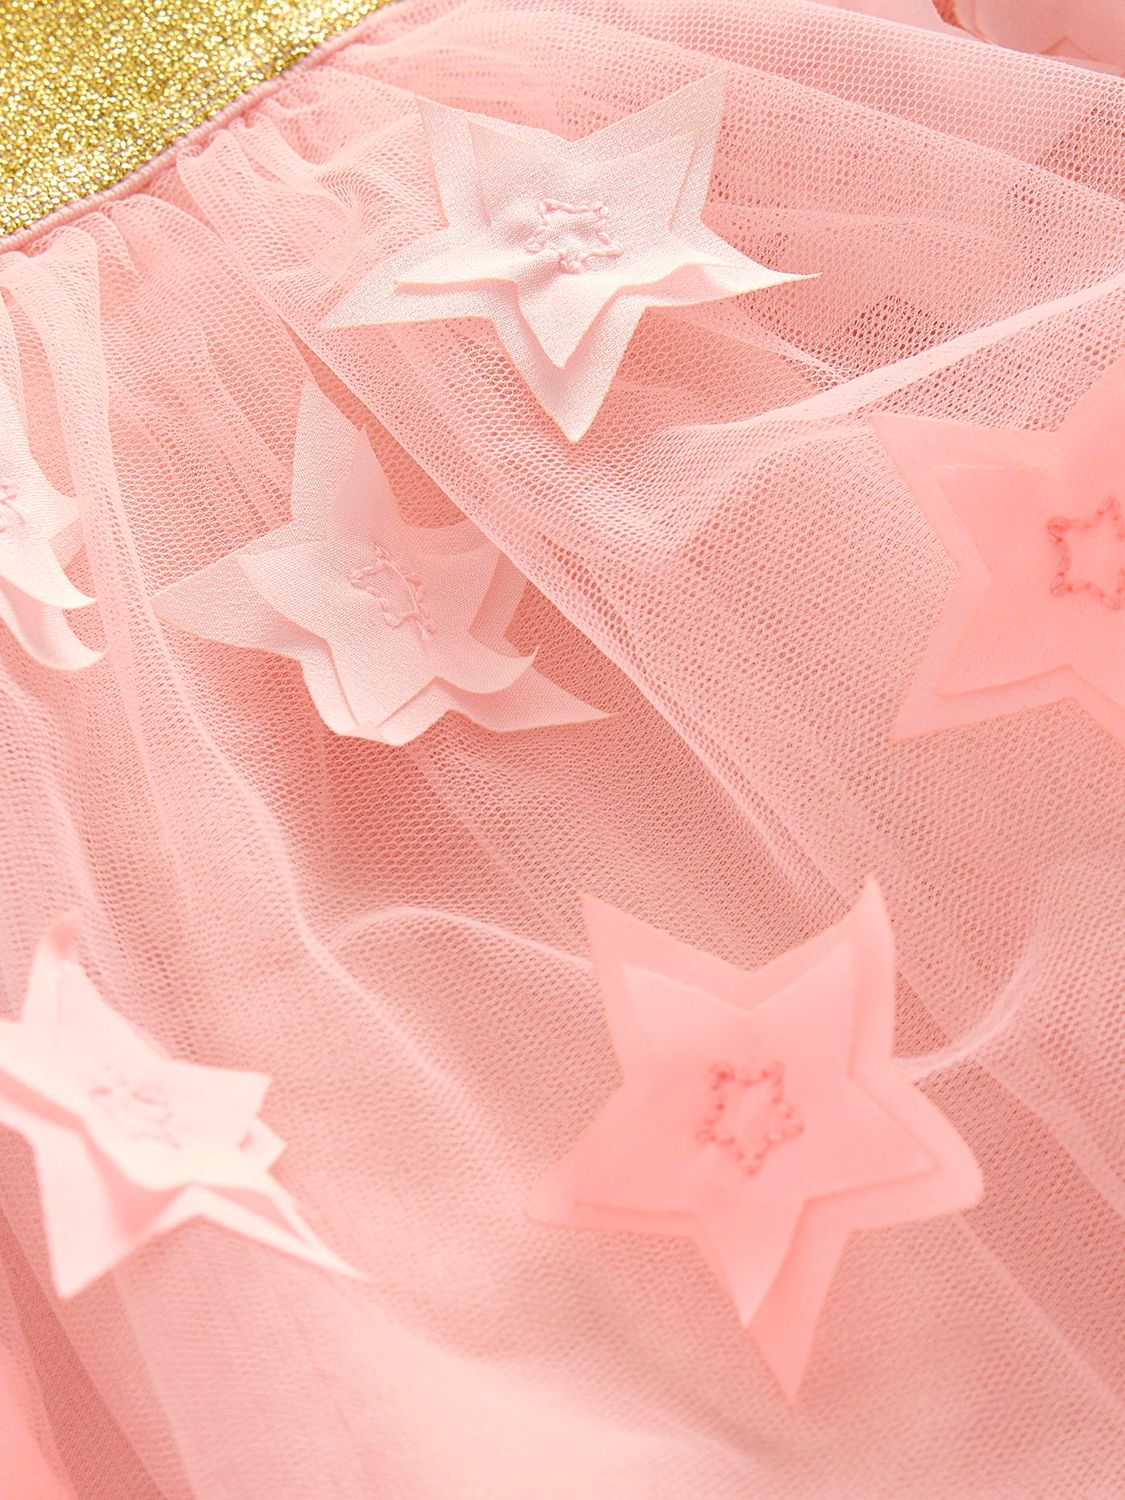 Mini Boden Kids' Tulle Star Mini Skirt, Pink Stars, 2-3 years